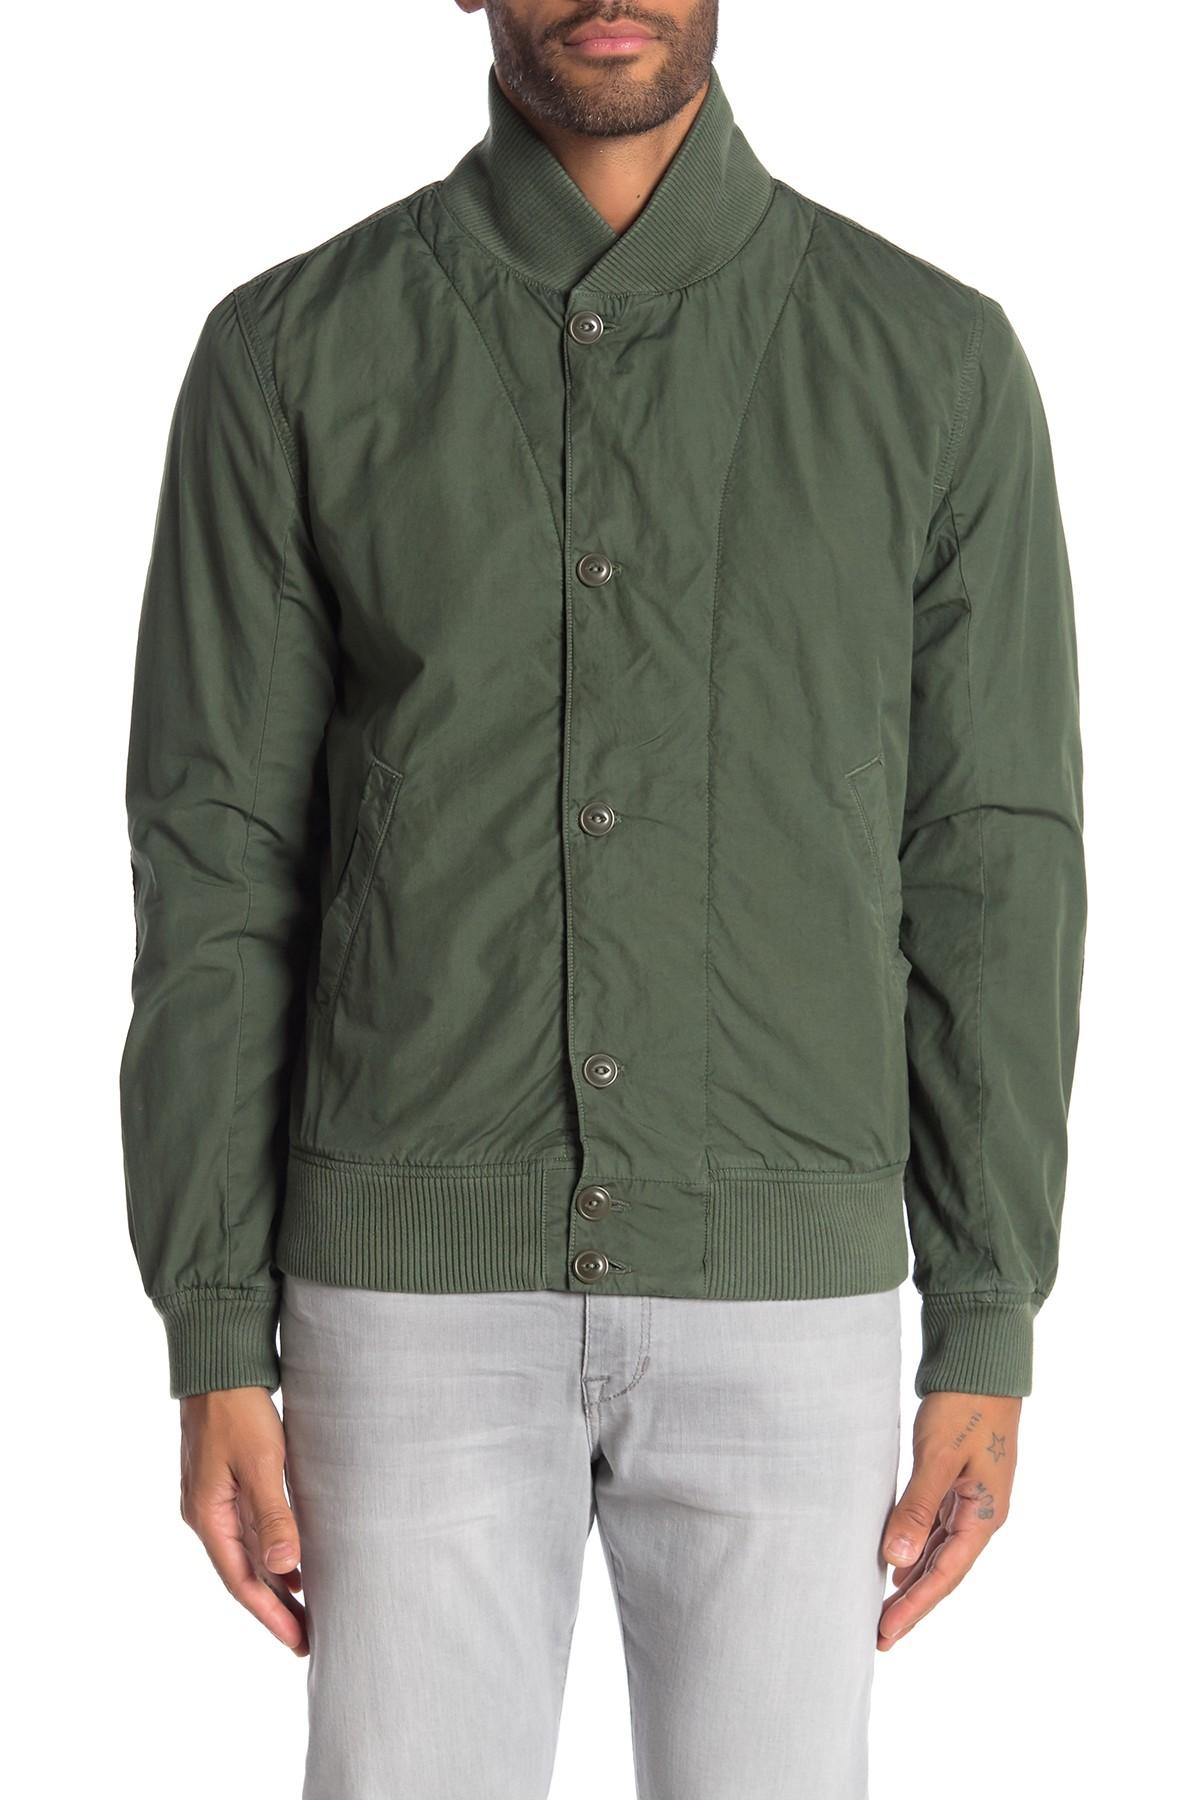 Save Khaki Fleece Lined Bomber Jacket in Green for Men - Lyst